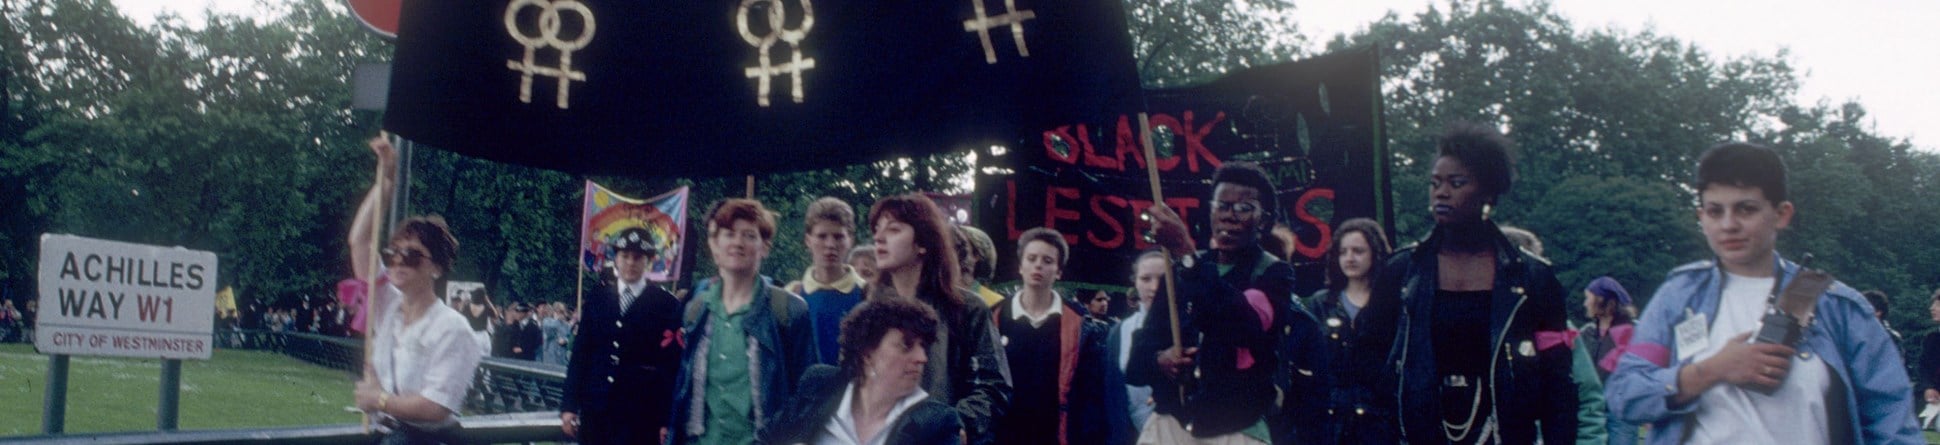 Lesbian Strength & Black Lesbians march at Lesbian and Gay Pride, London, 1987